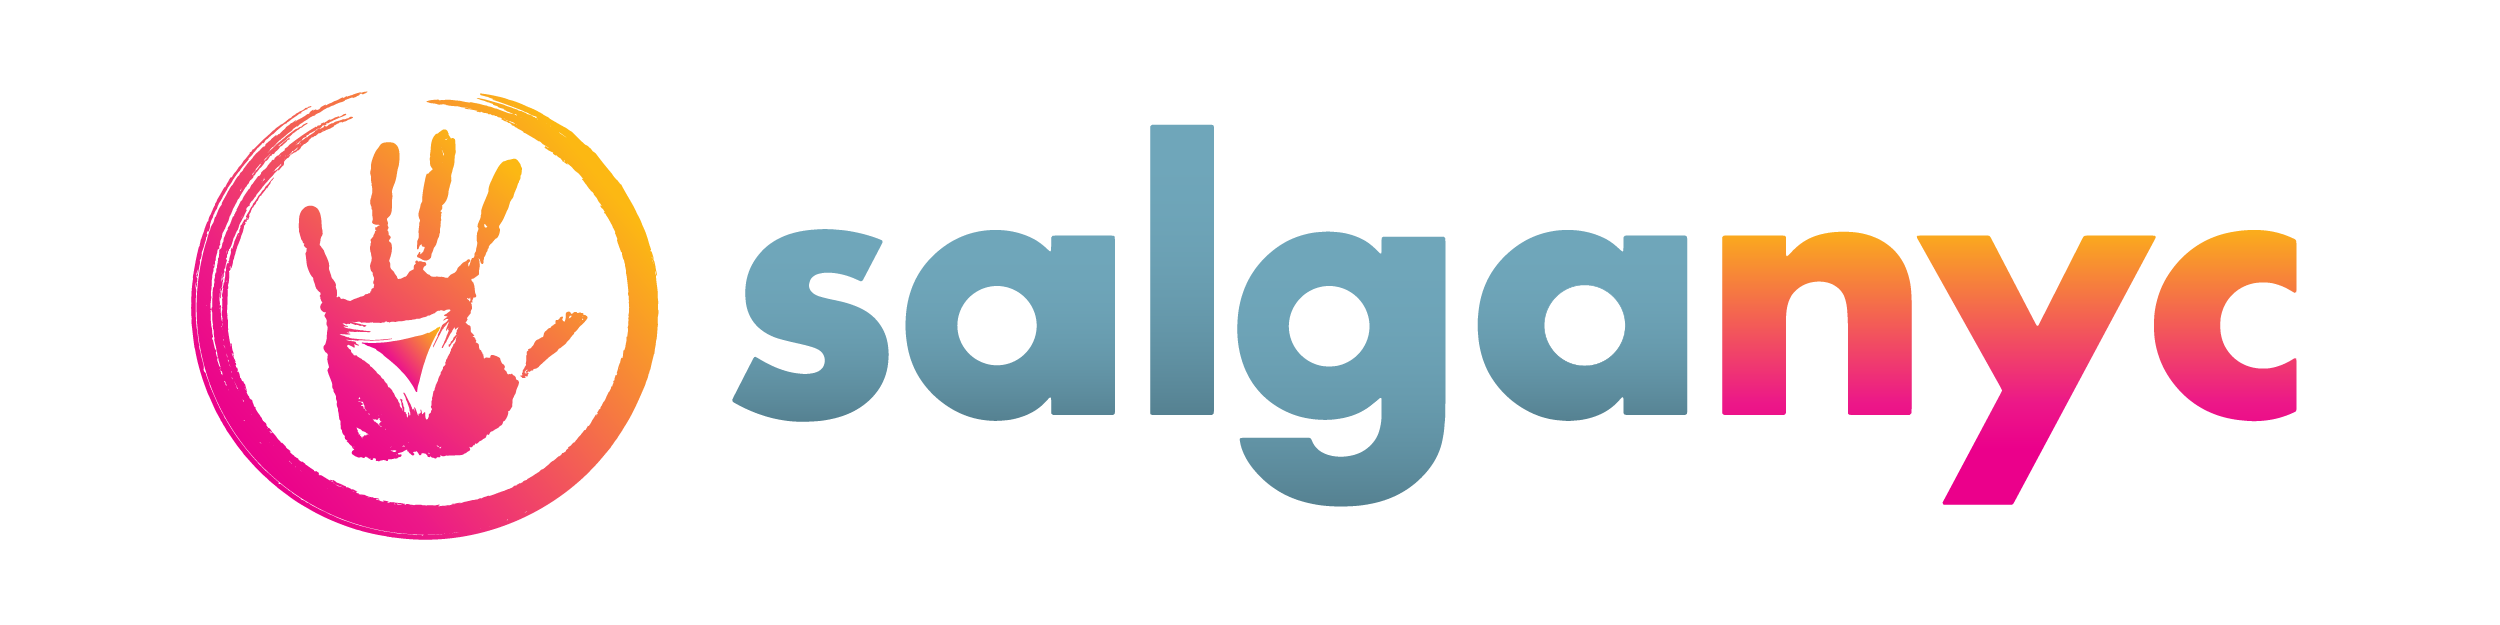 salgalogo-2.png